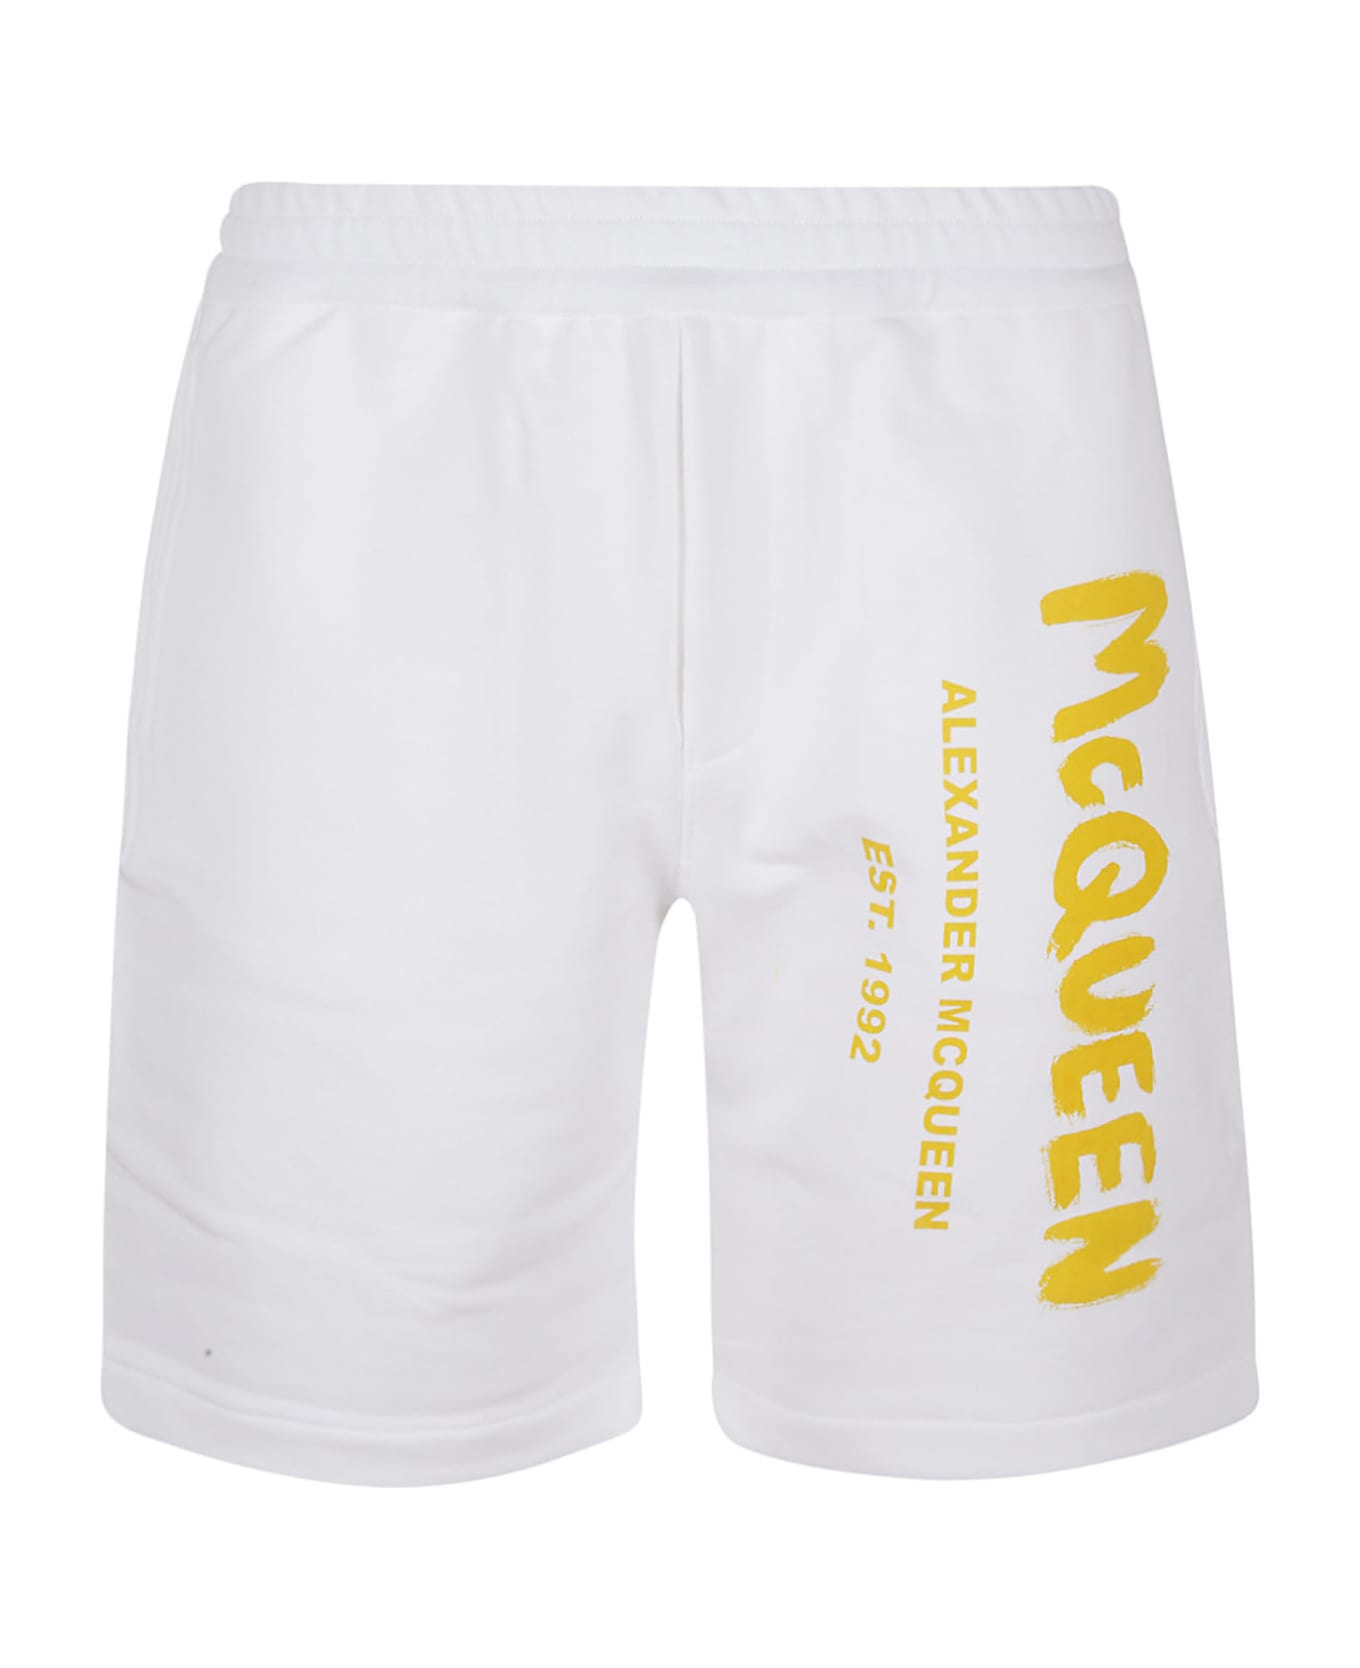 Alexander McQueen Graffiti Prt Shorts - White Yellow